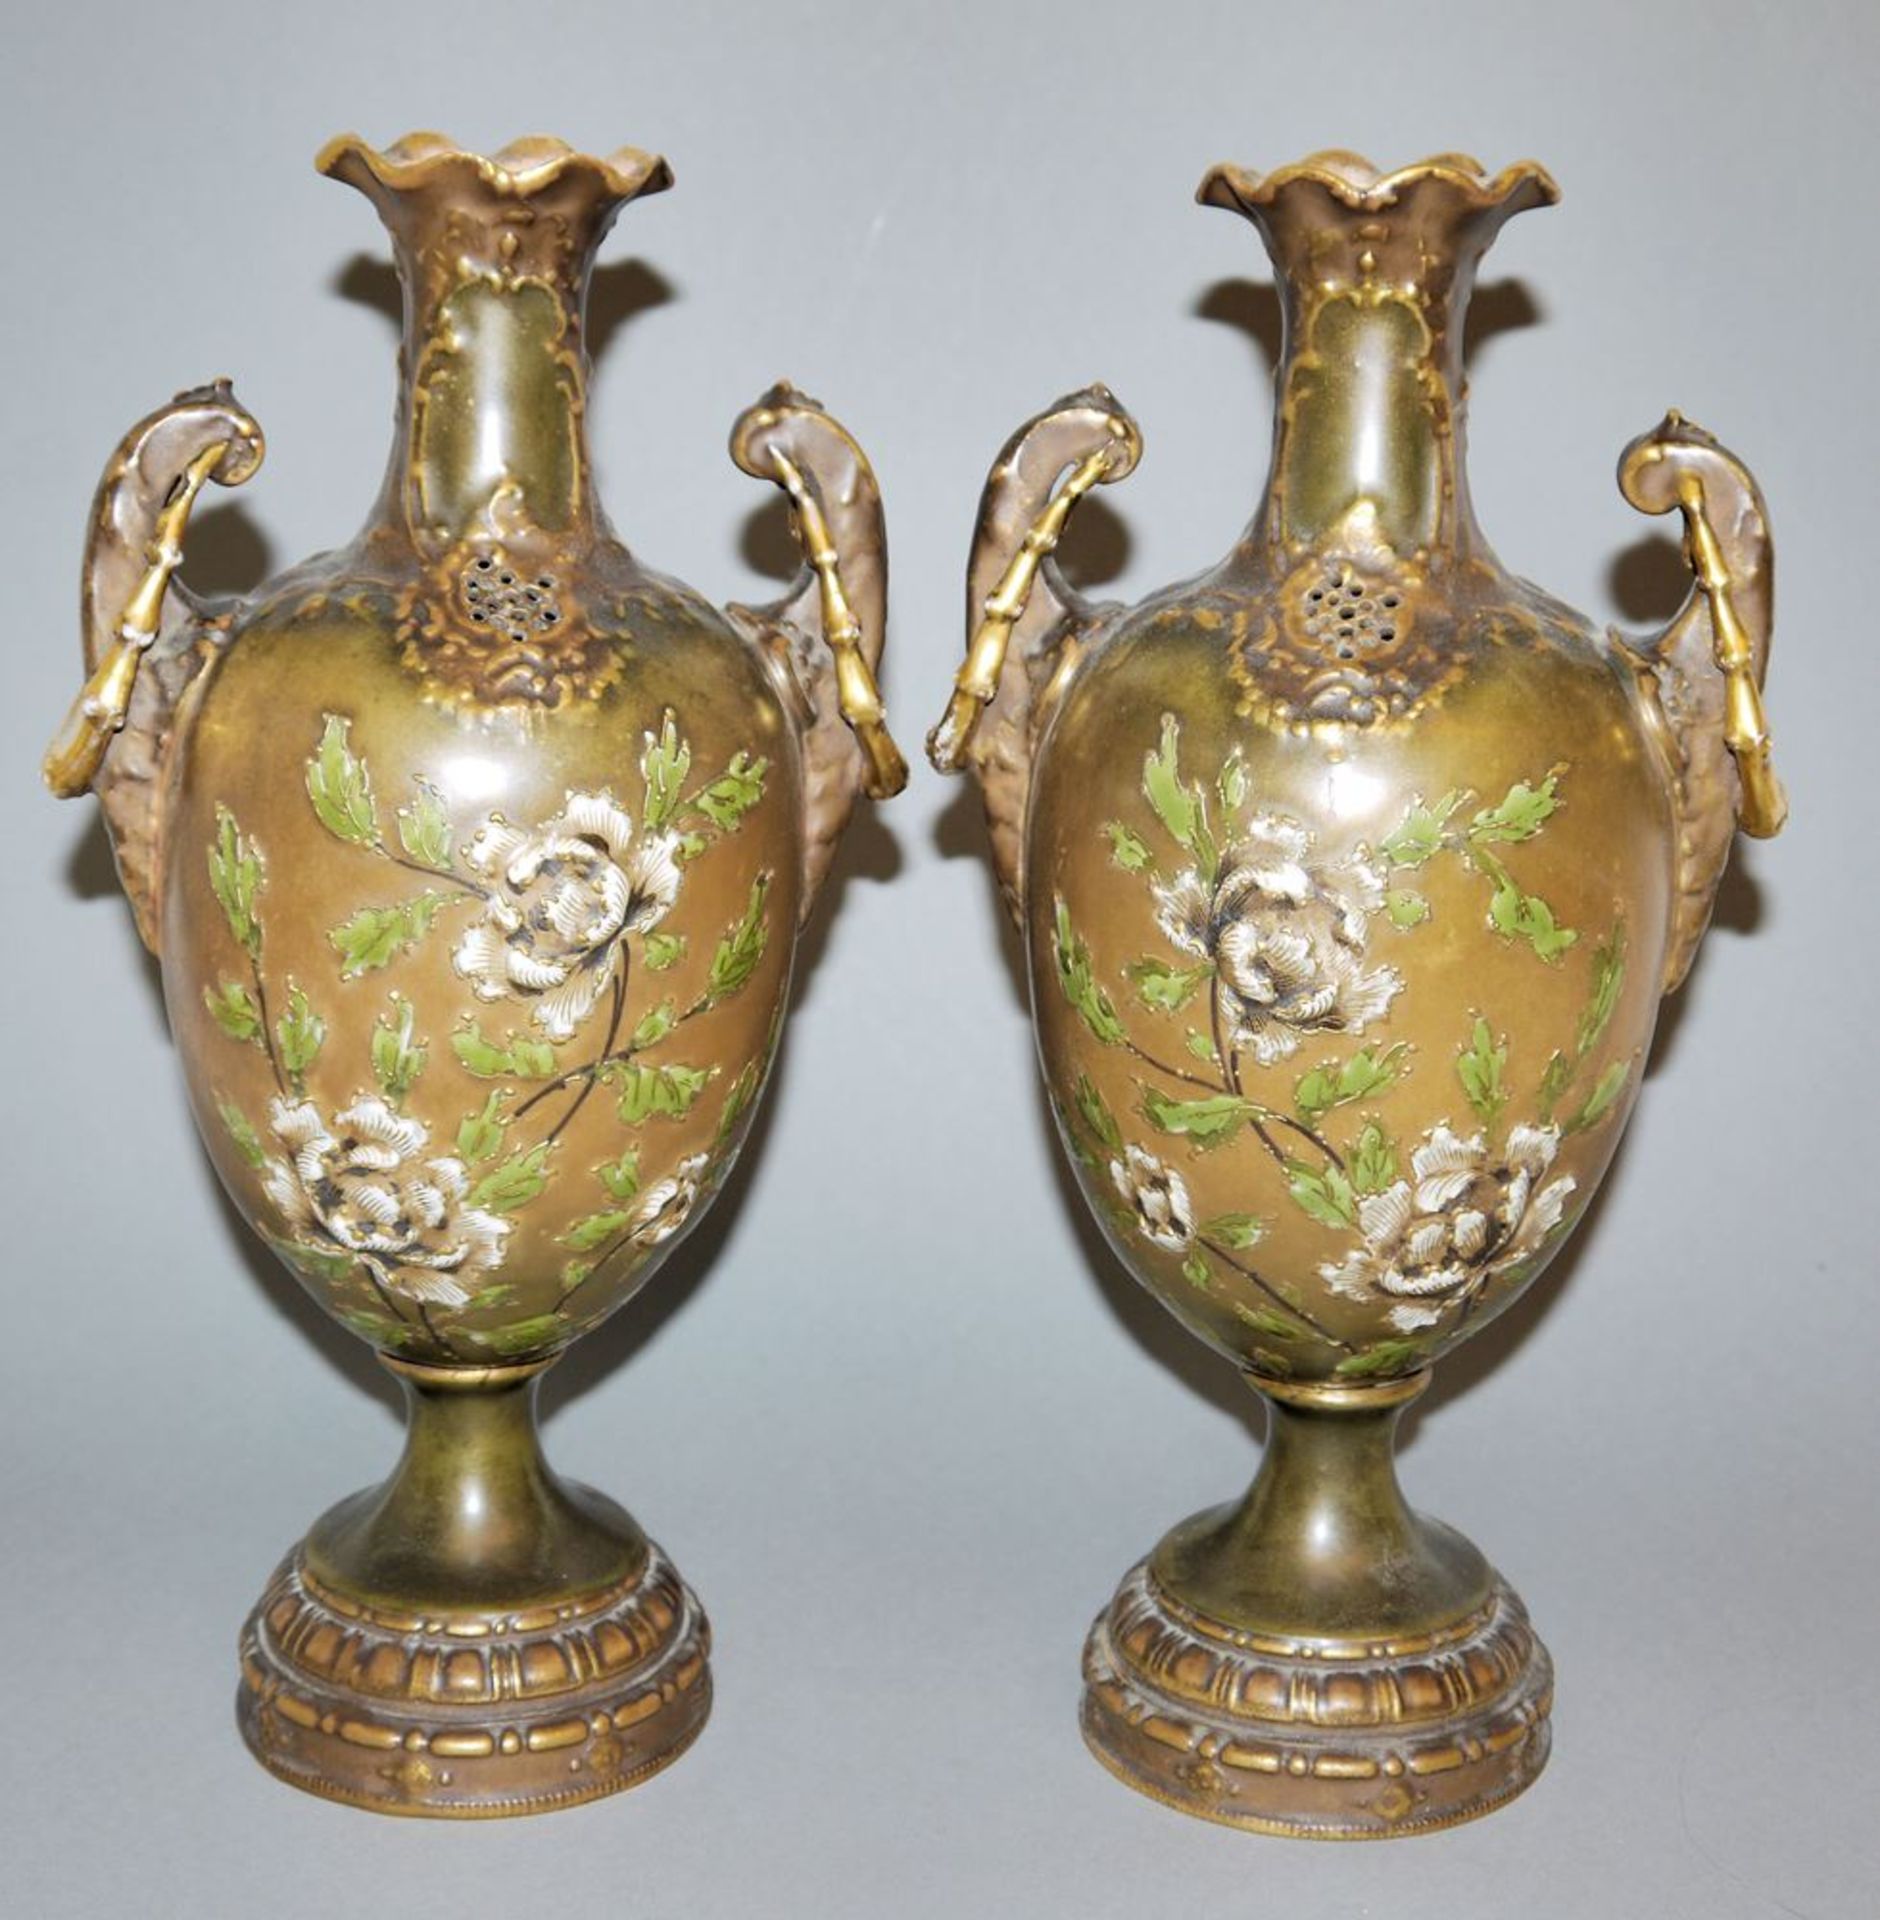 Paar Porzellan-Amphoren-Vasen, Wahliss, Wien / Turn-Teplitz um 1900